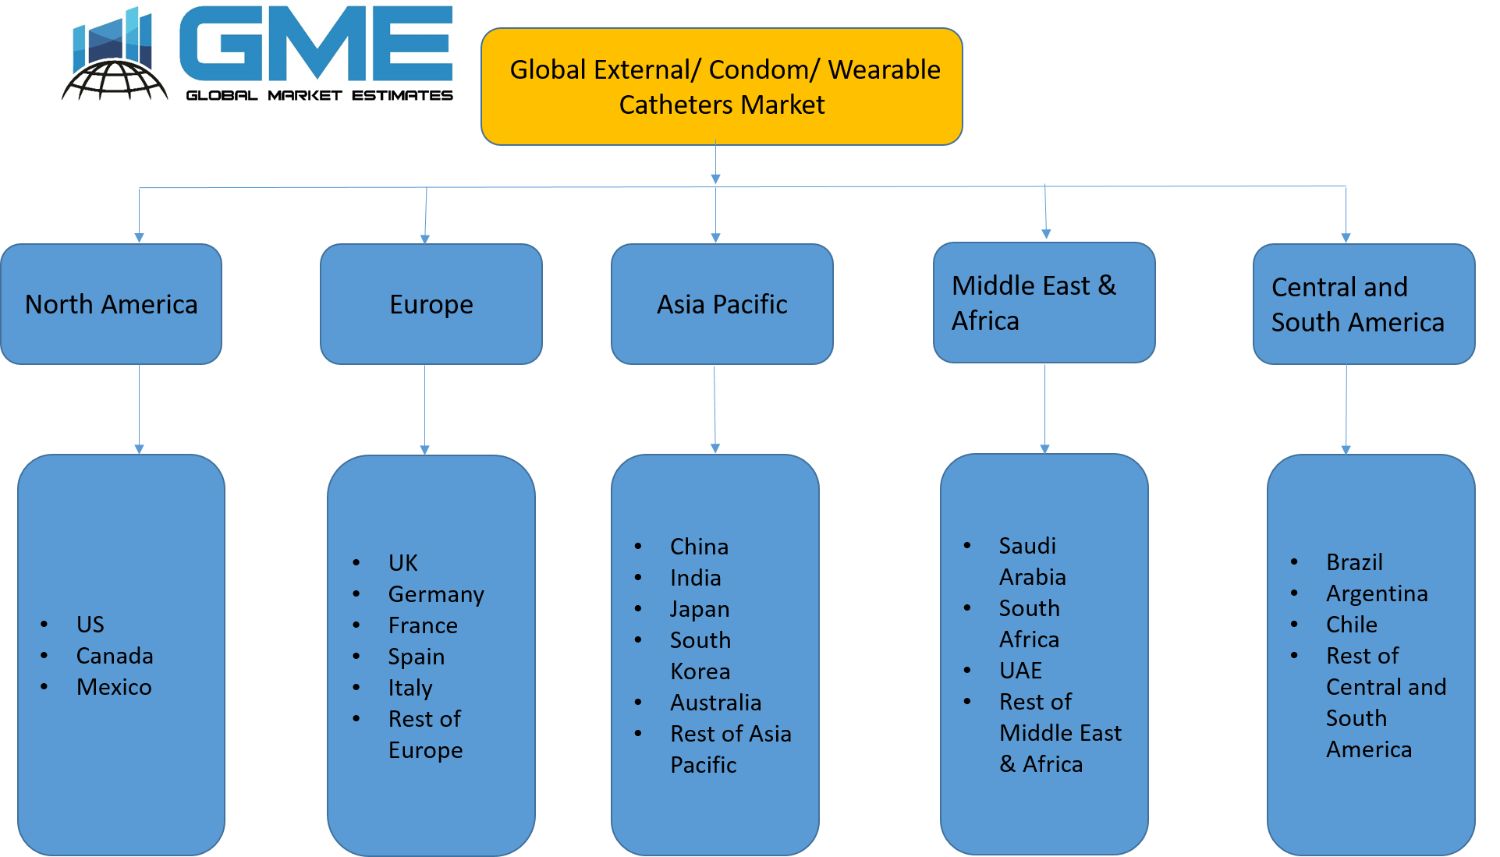 External Condom Wearable Catheters Market - Regional Analysis